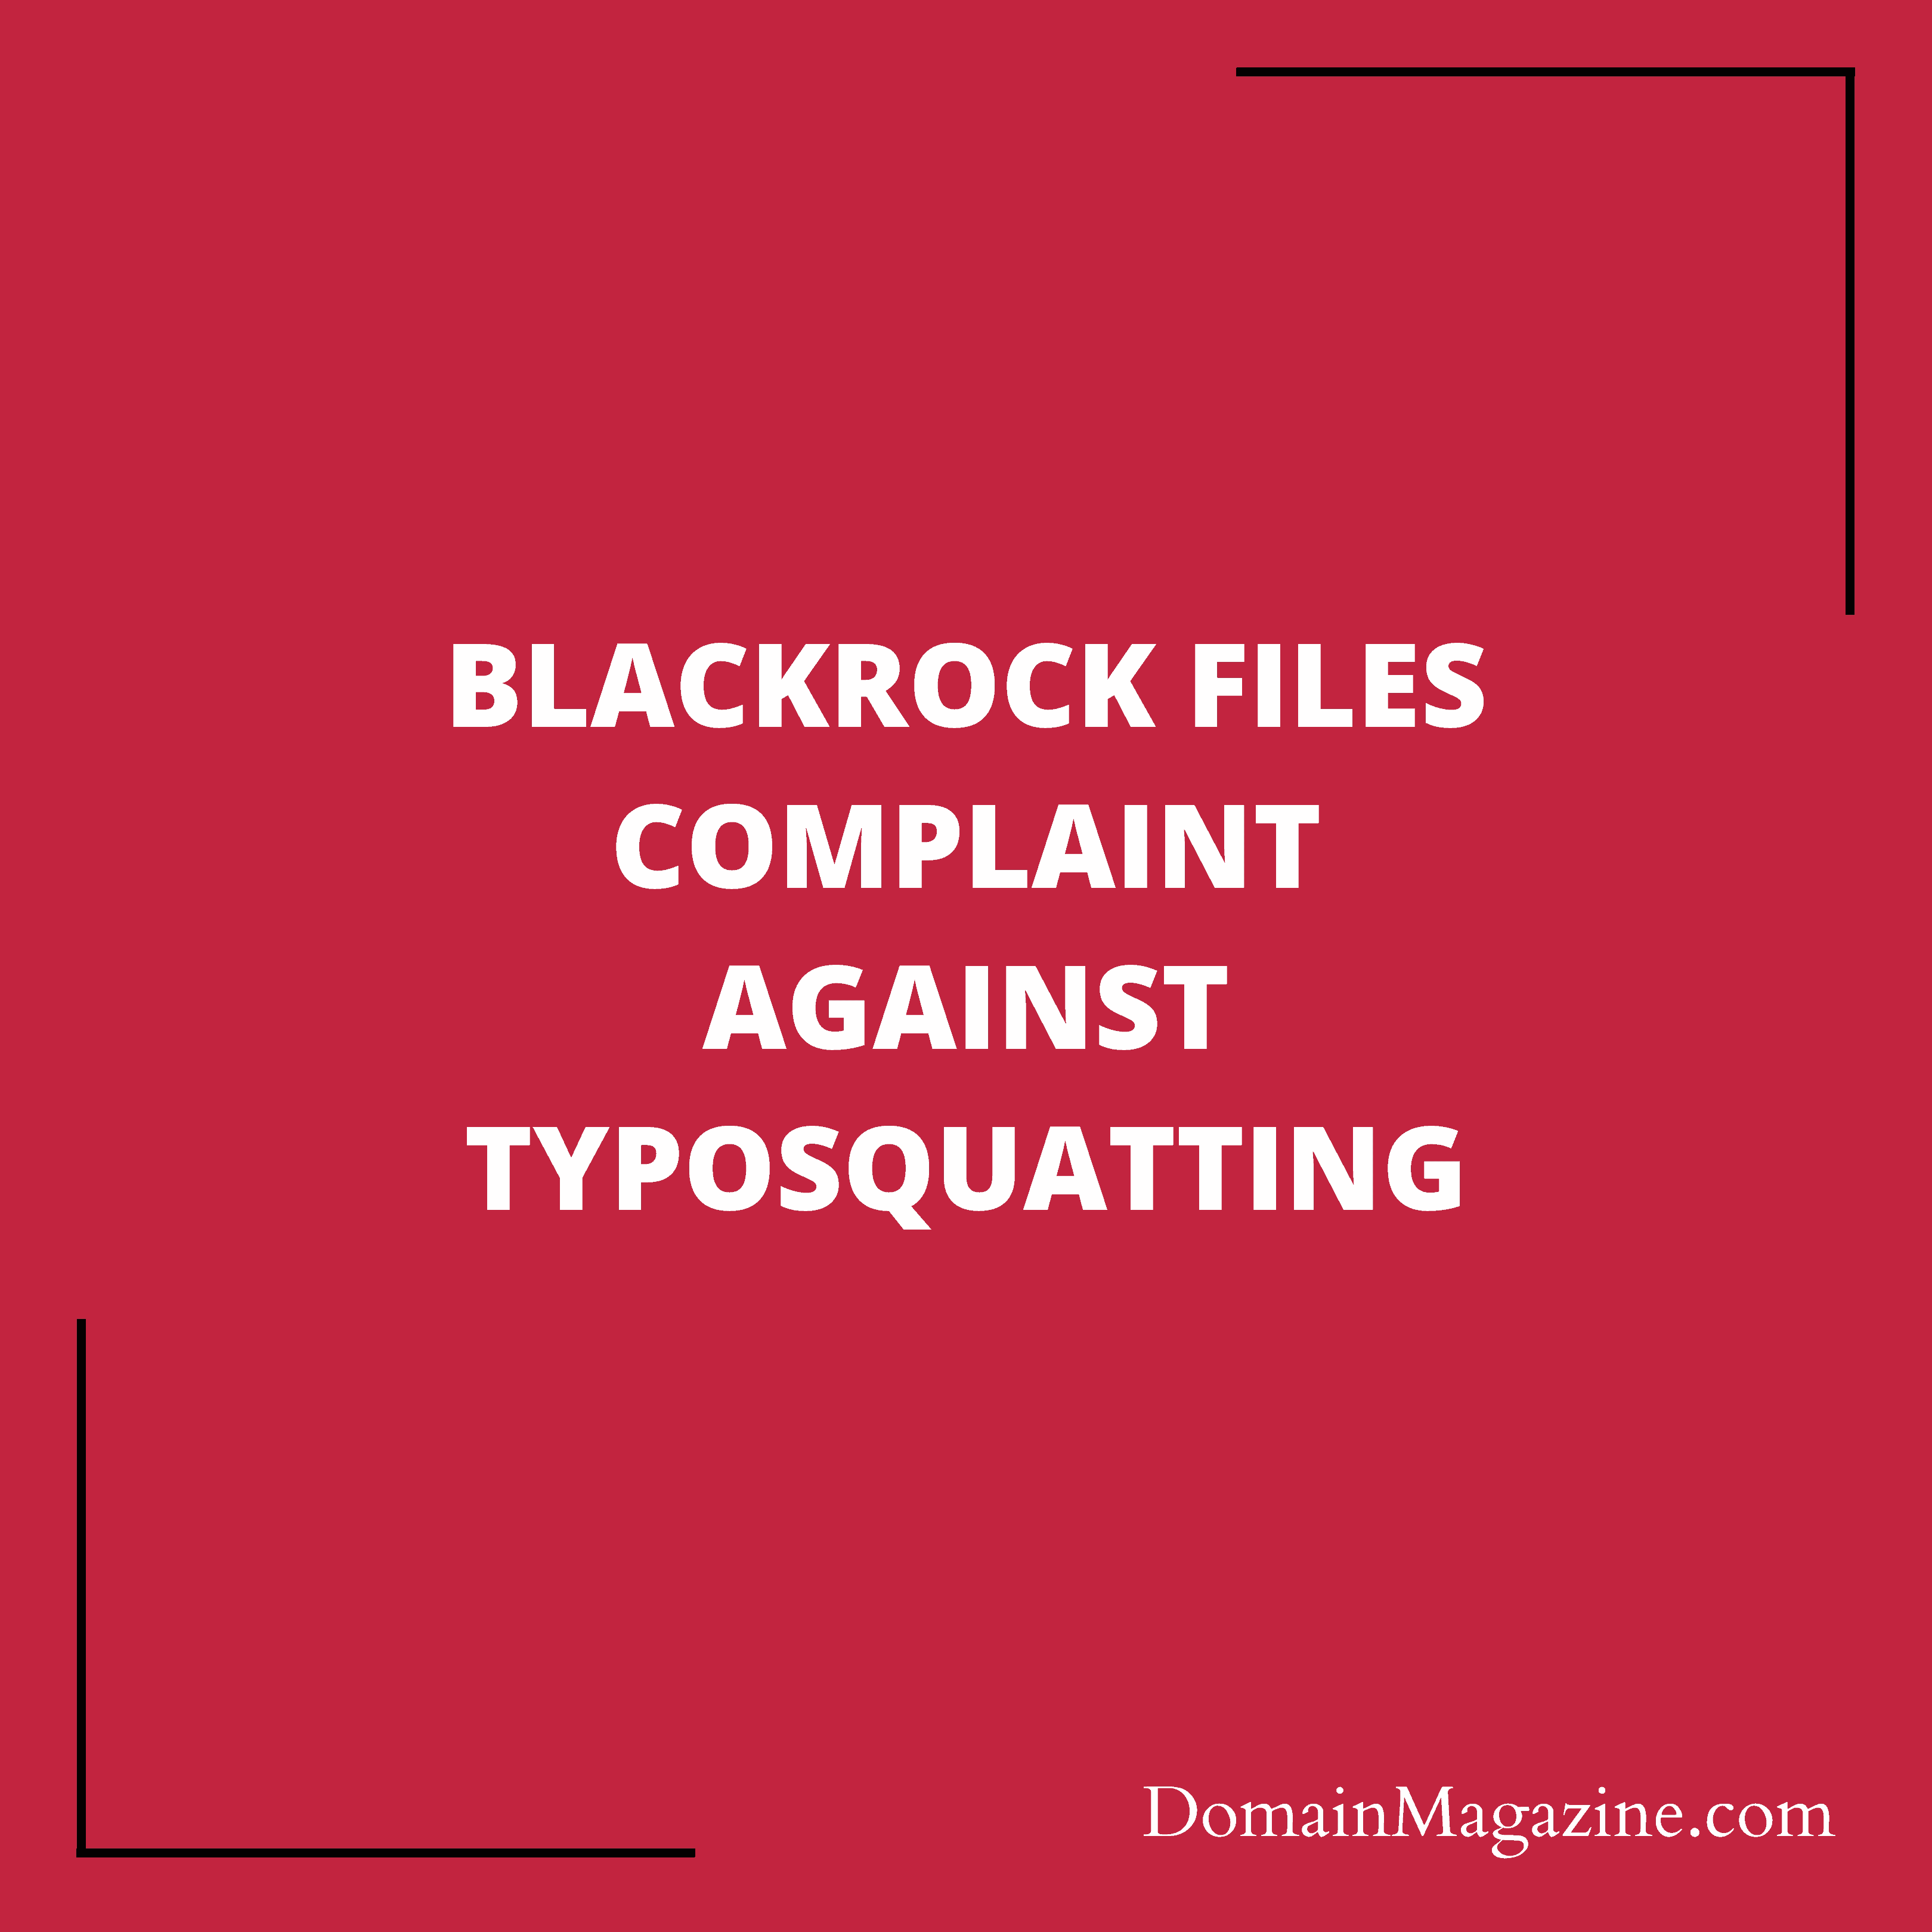 BlackRock files complaint against typosquatting